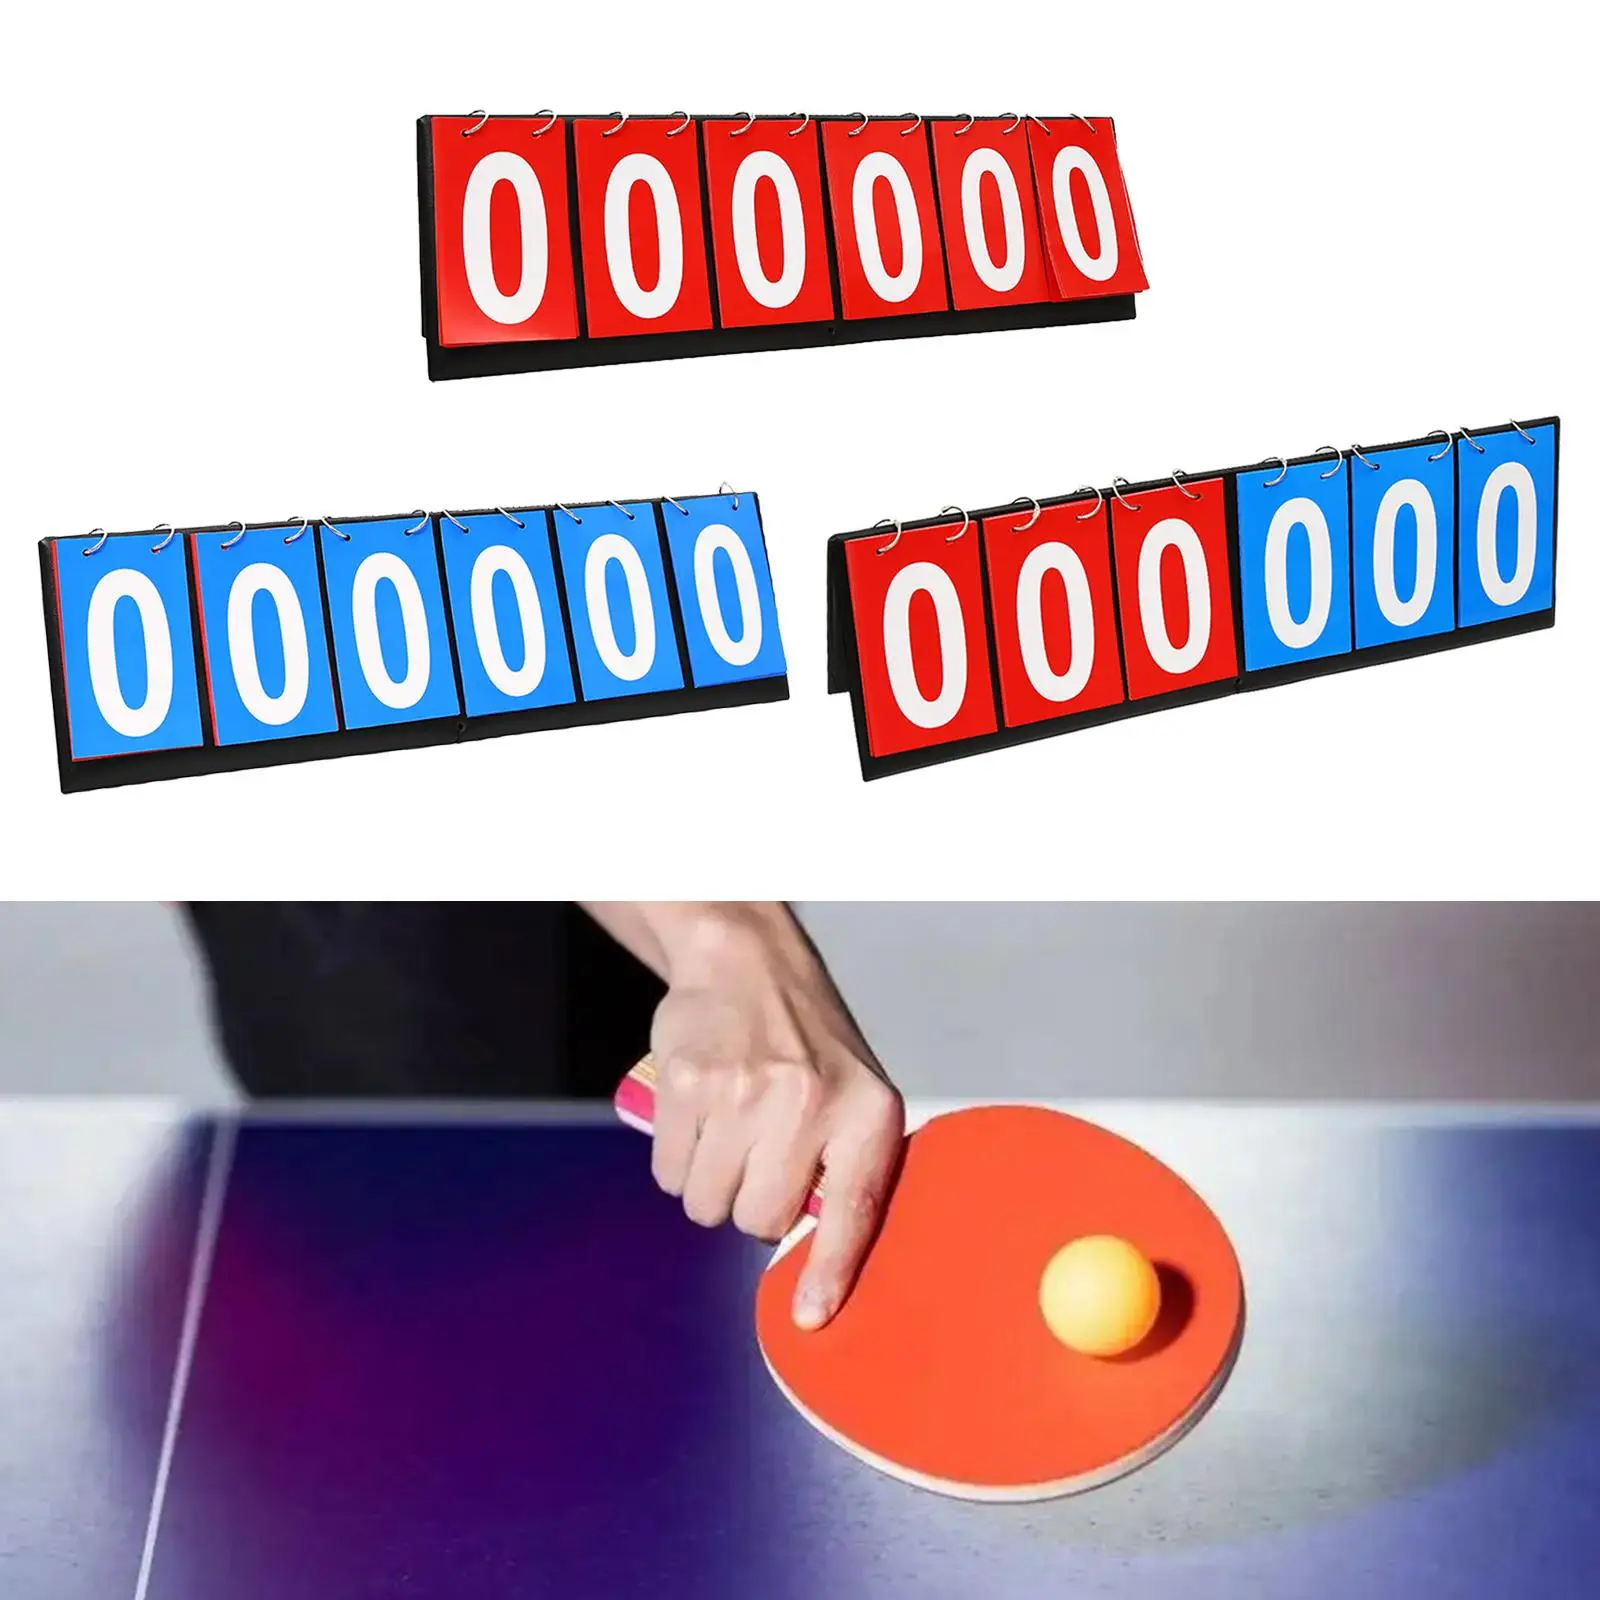 6 digits Table Top Scoreboard Portable Scoring for Tennis Ball Indoor Games